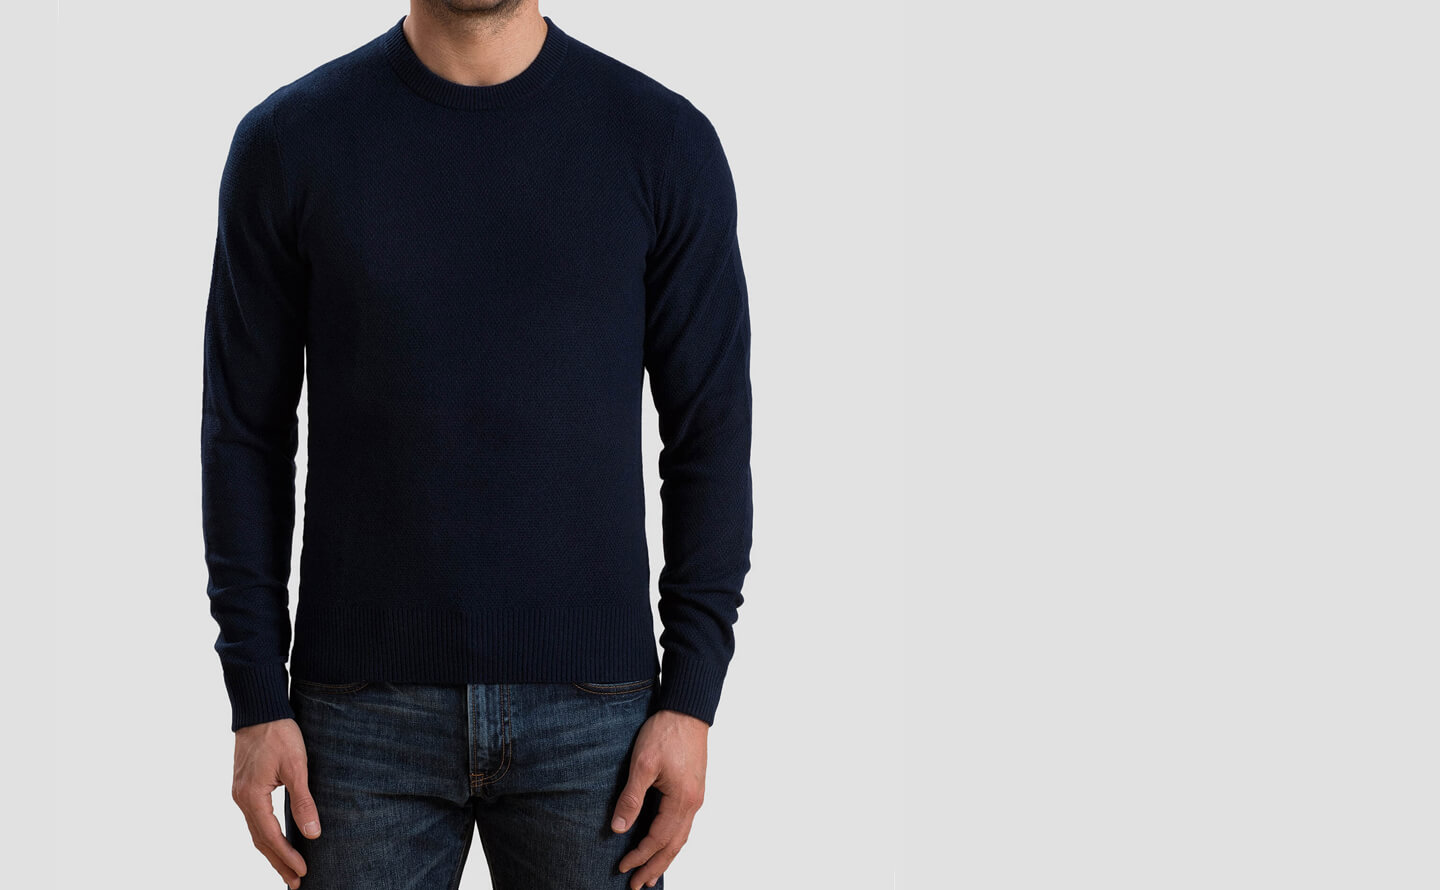 Navy Cobble Stitch Cashmere Crewneck Sweater by Proper Cloth